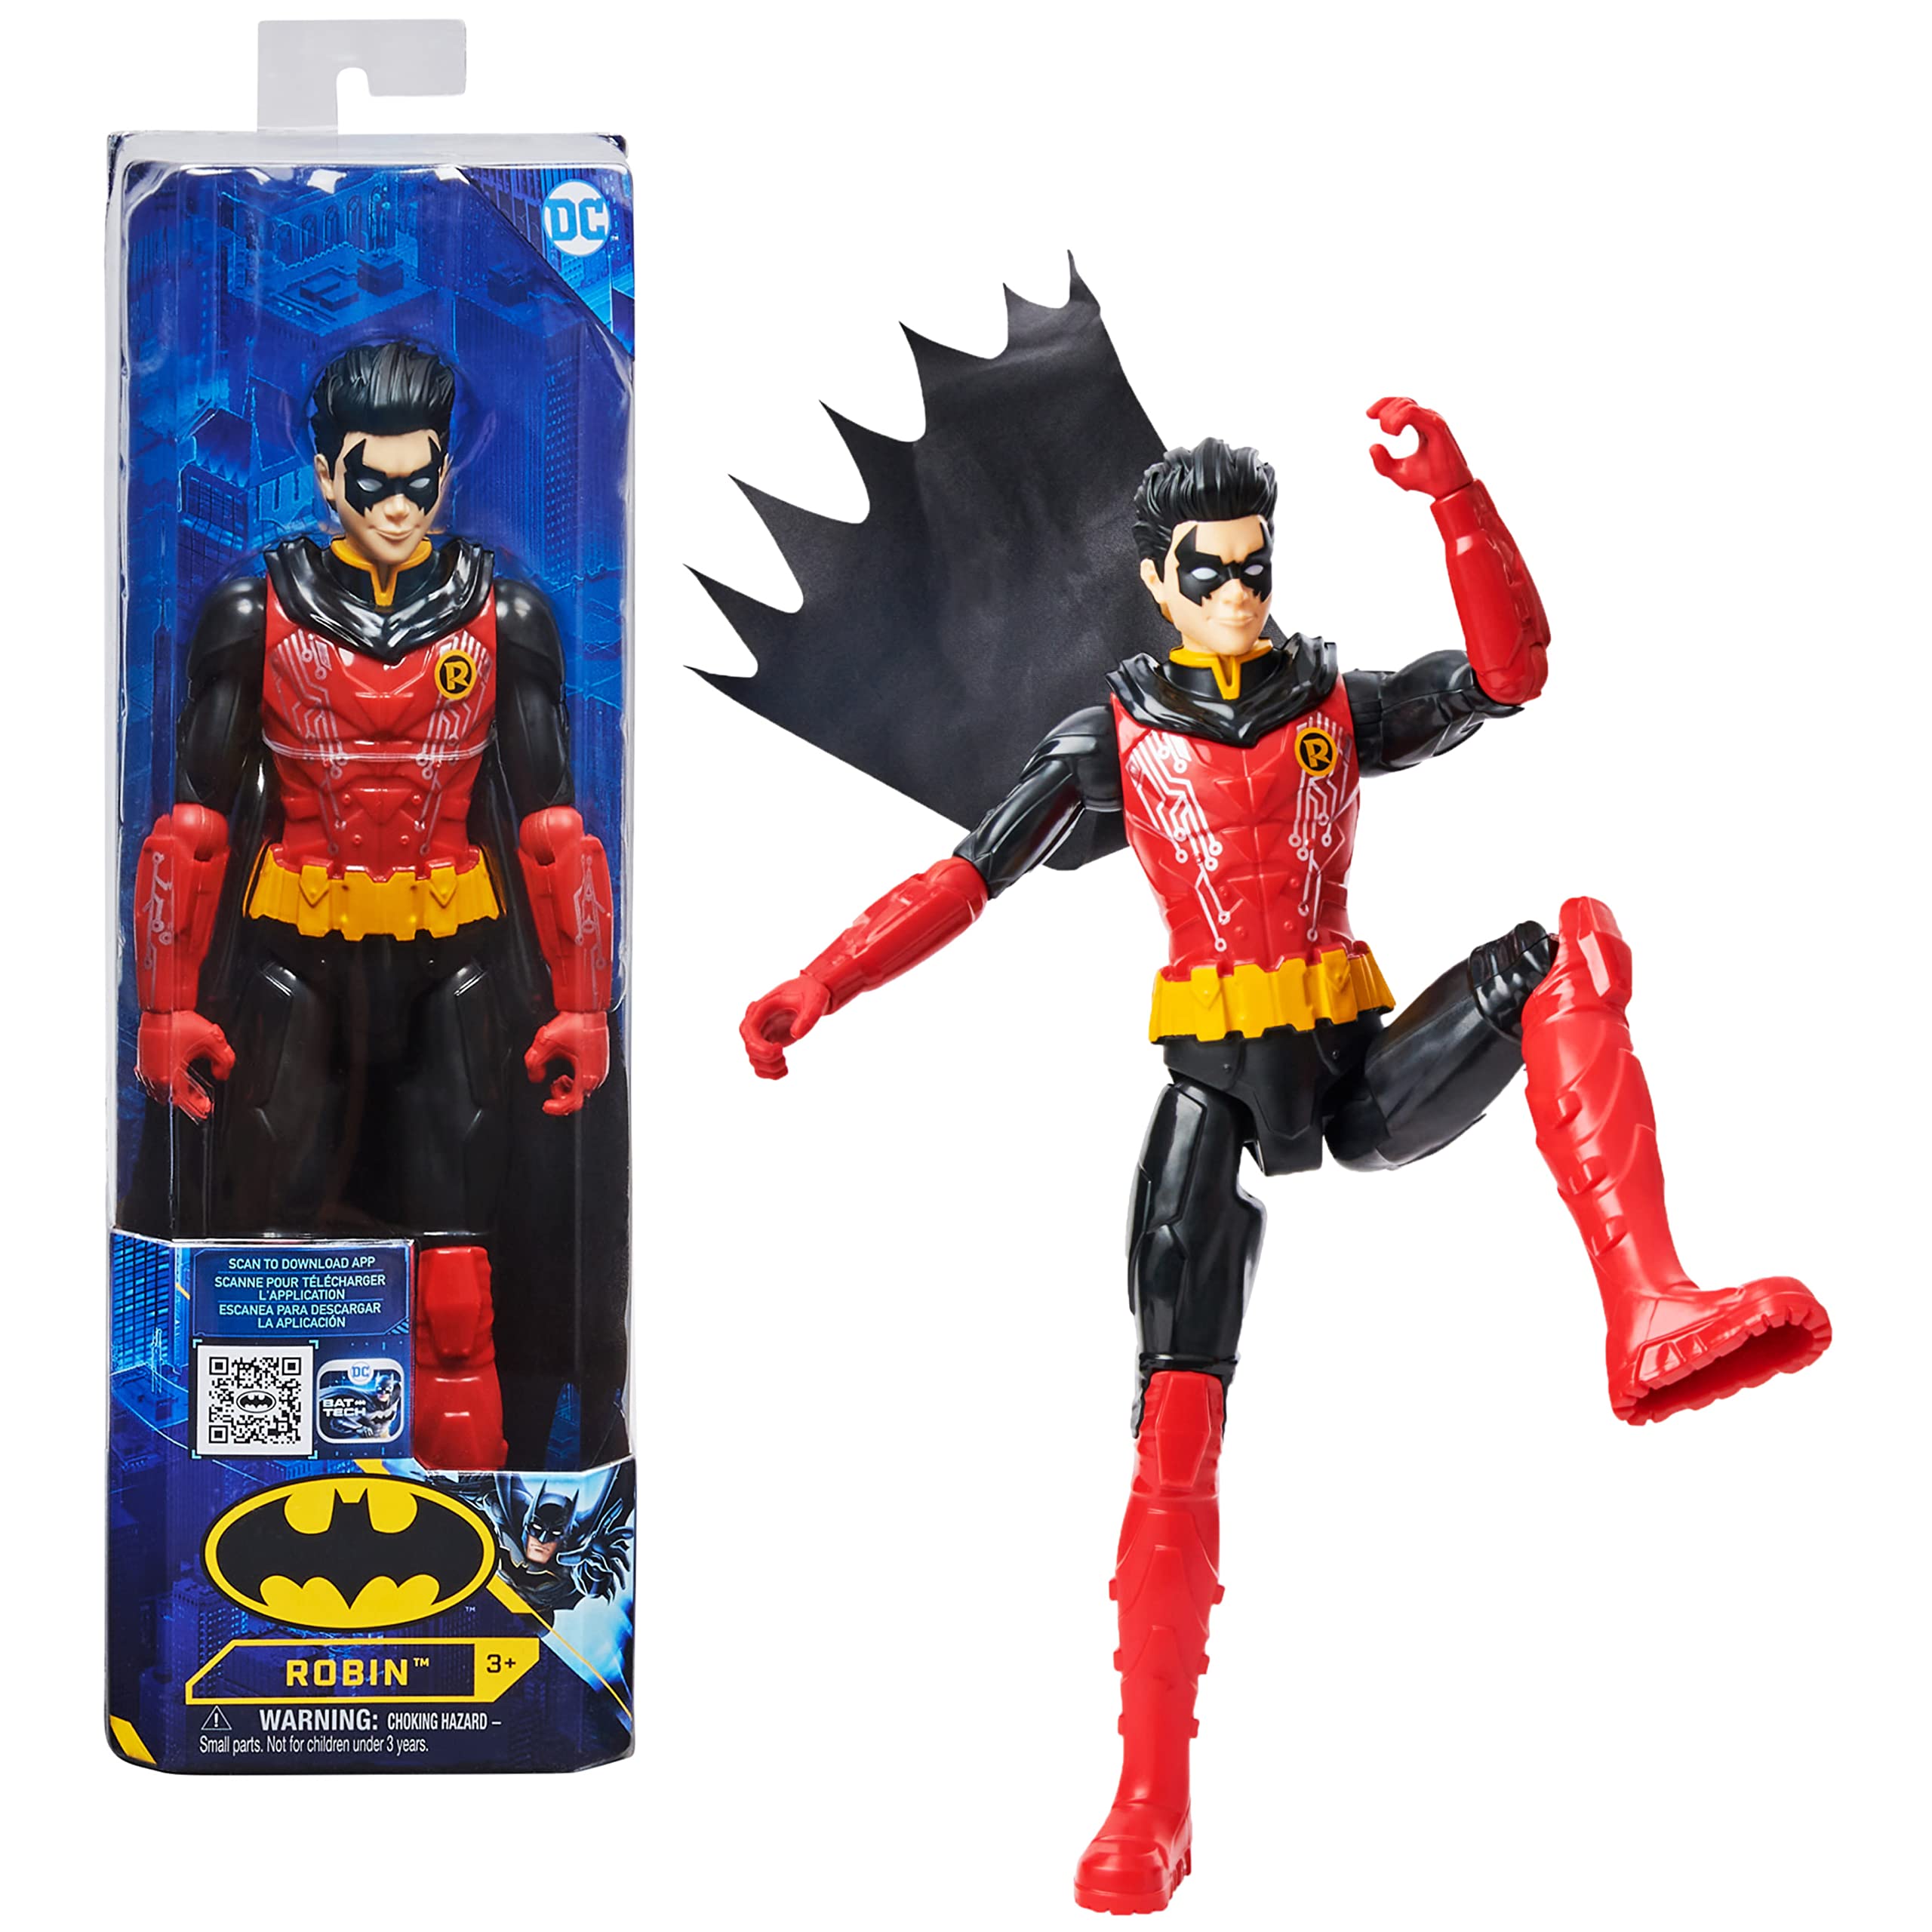 Mua DC Comics Batman 12-inch Robin Action Figure (Red/Black Suit), Kids Toys  for Boys Aged 3 and up trên Amazon Anh chính hãng 2023 | Giaonhan247